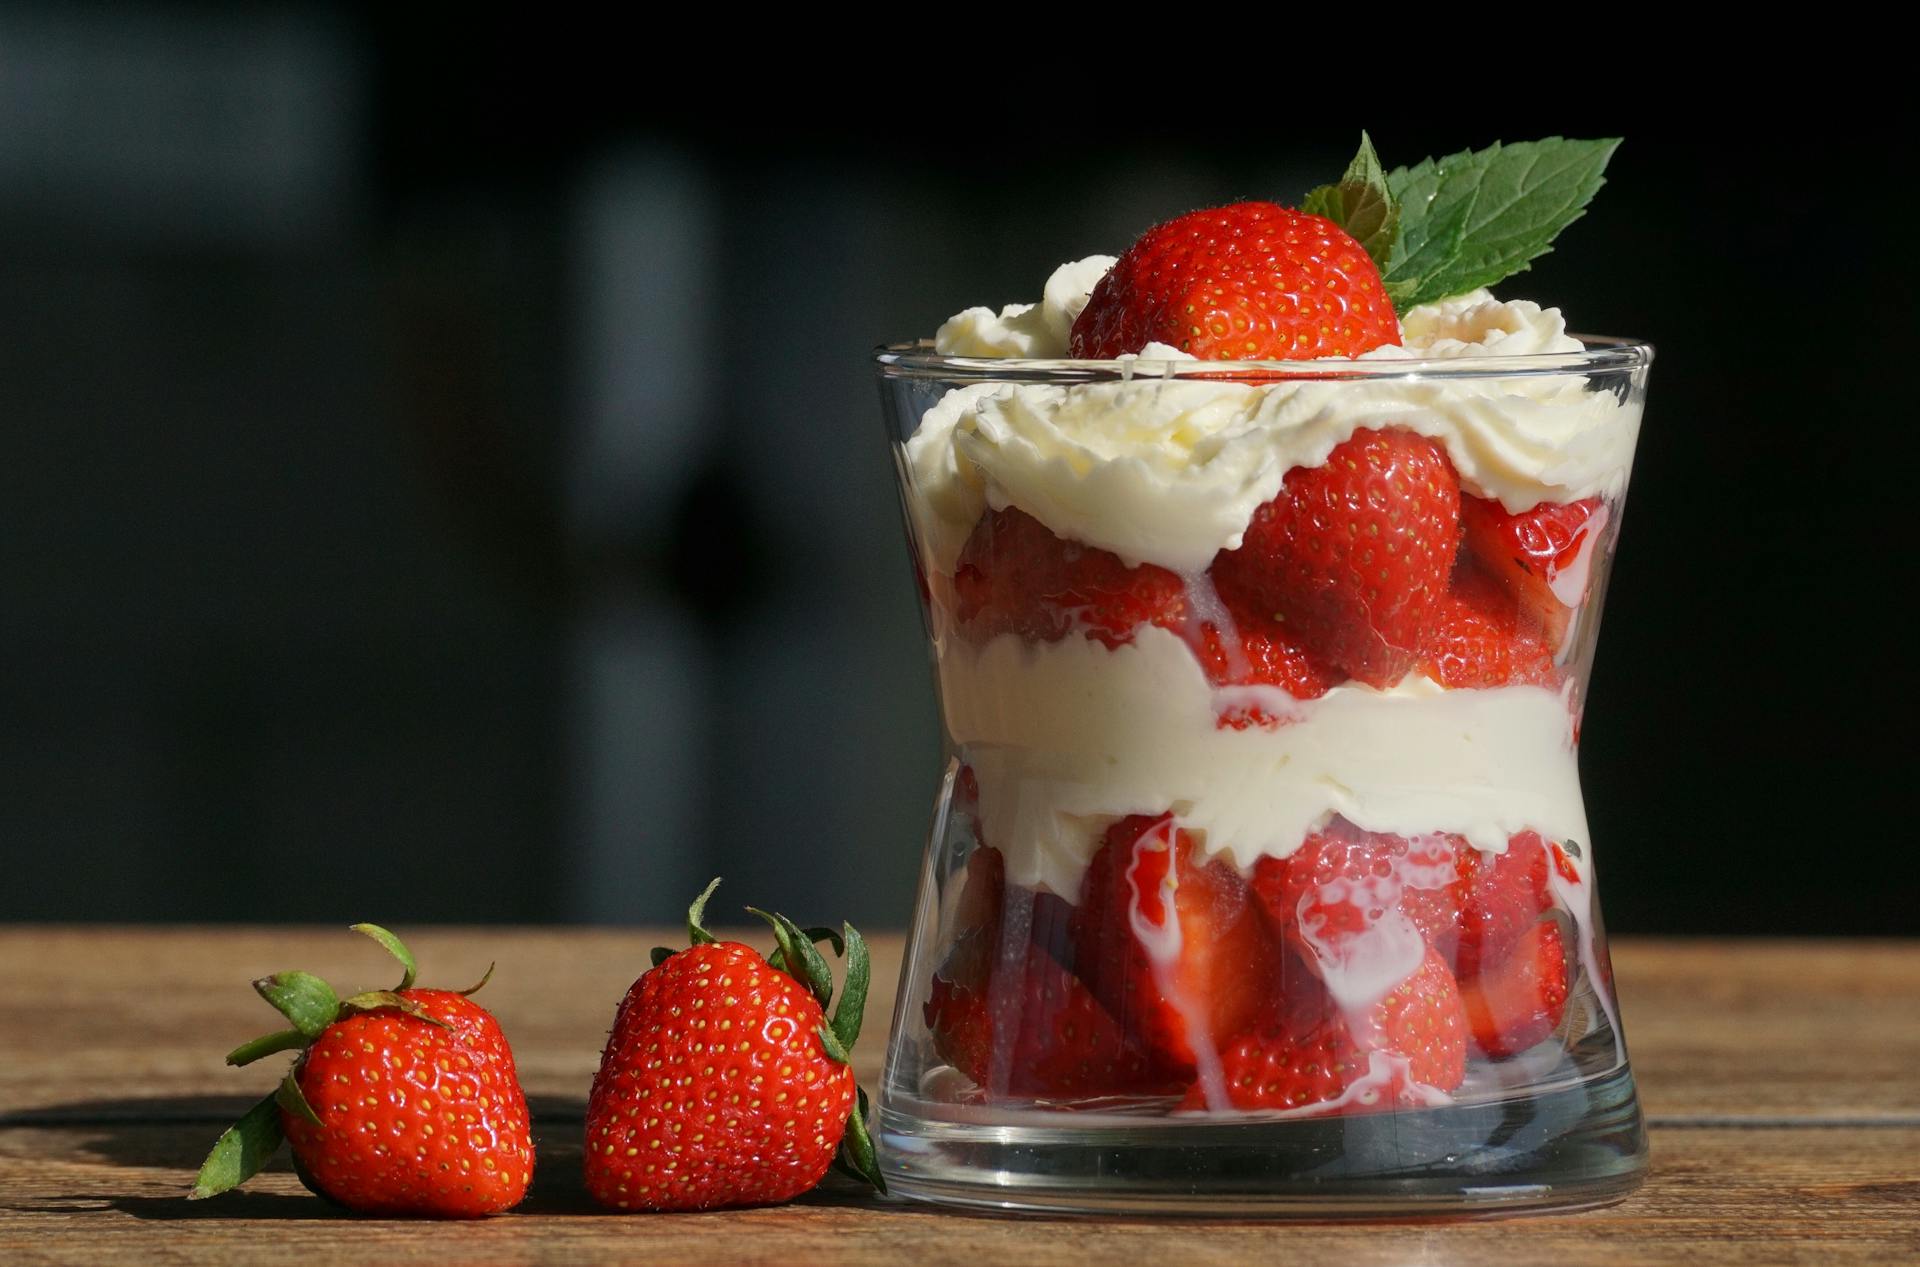 Strawberry dessert.